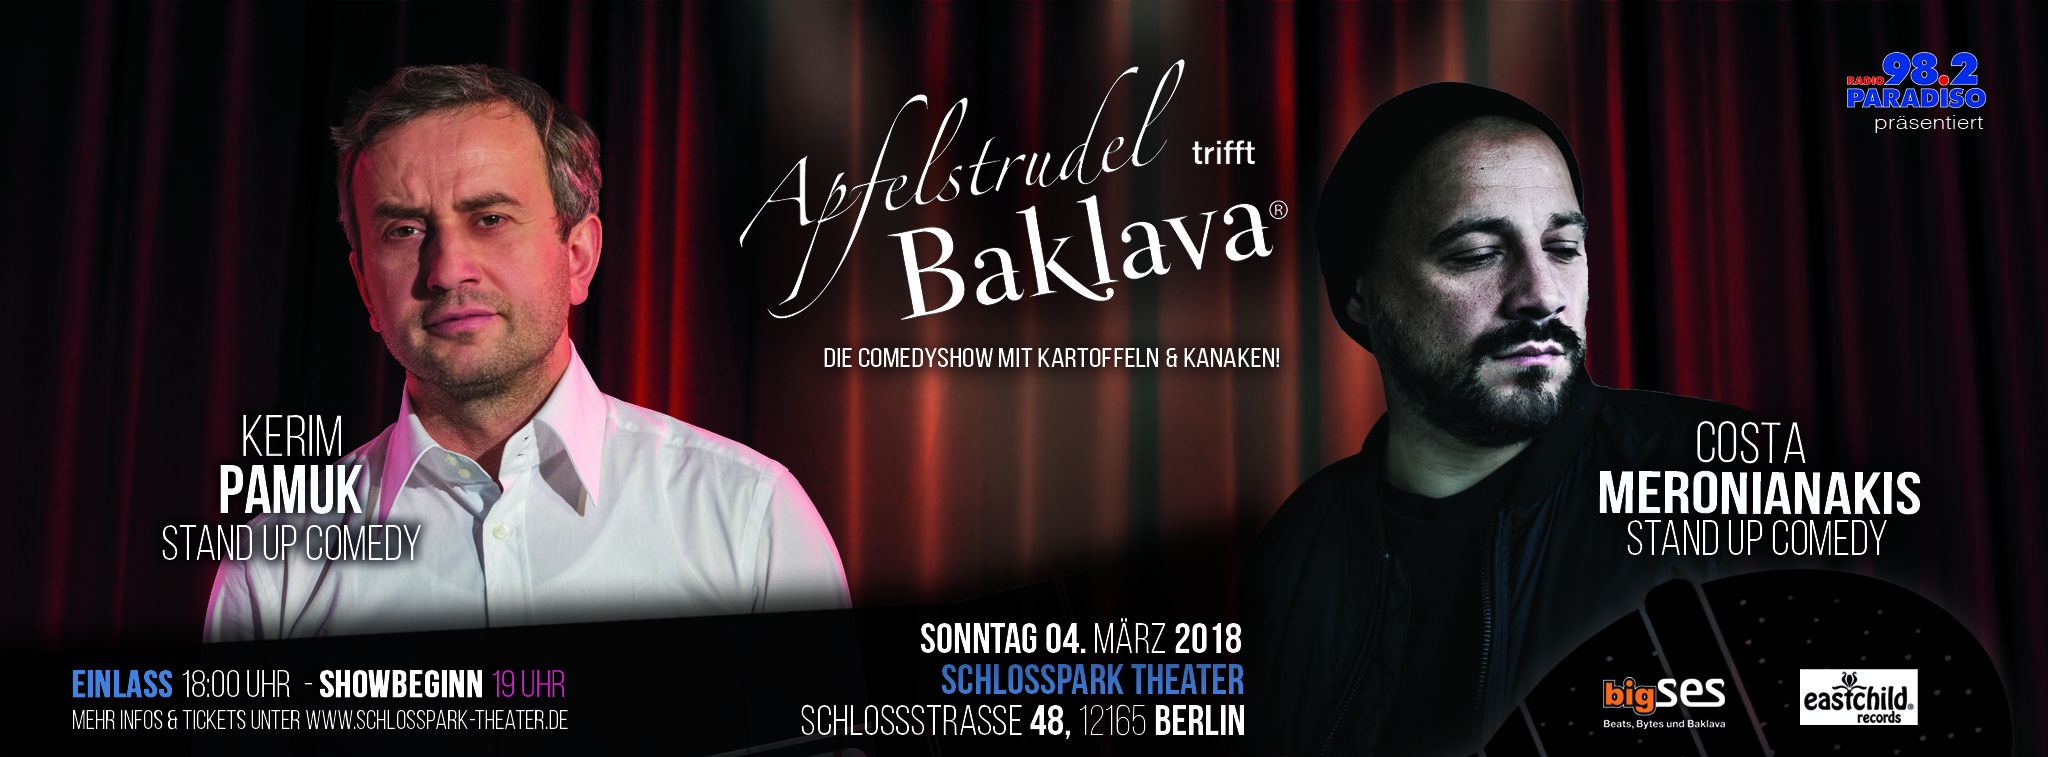 «Apfelstrudel trifft Baklava»: Κωμωδία στο Βερολίνο με πρωταγωνιστή τον Έλληνα Κώστα Μερωνιανάκη